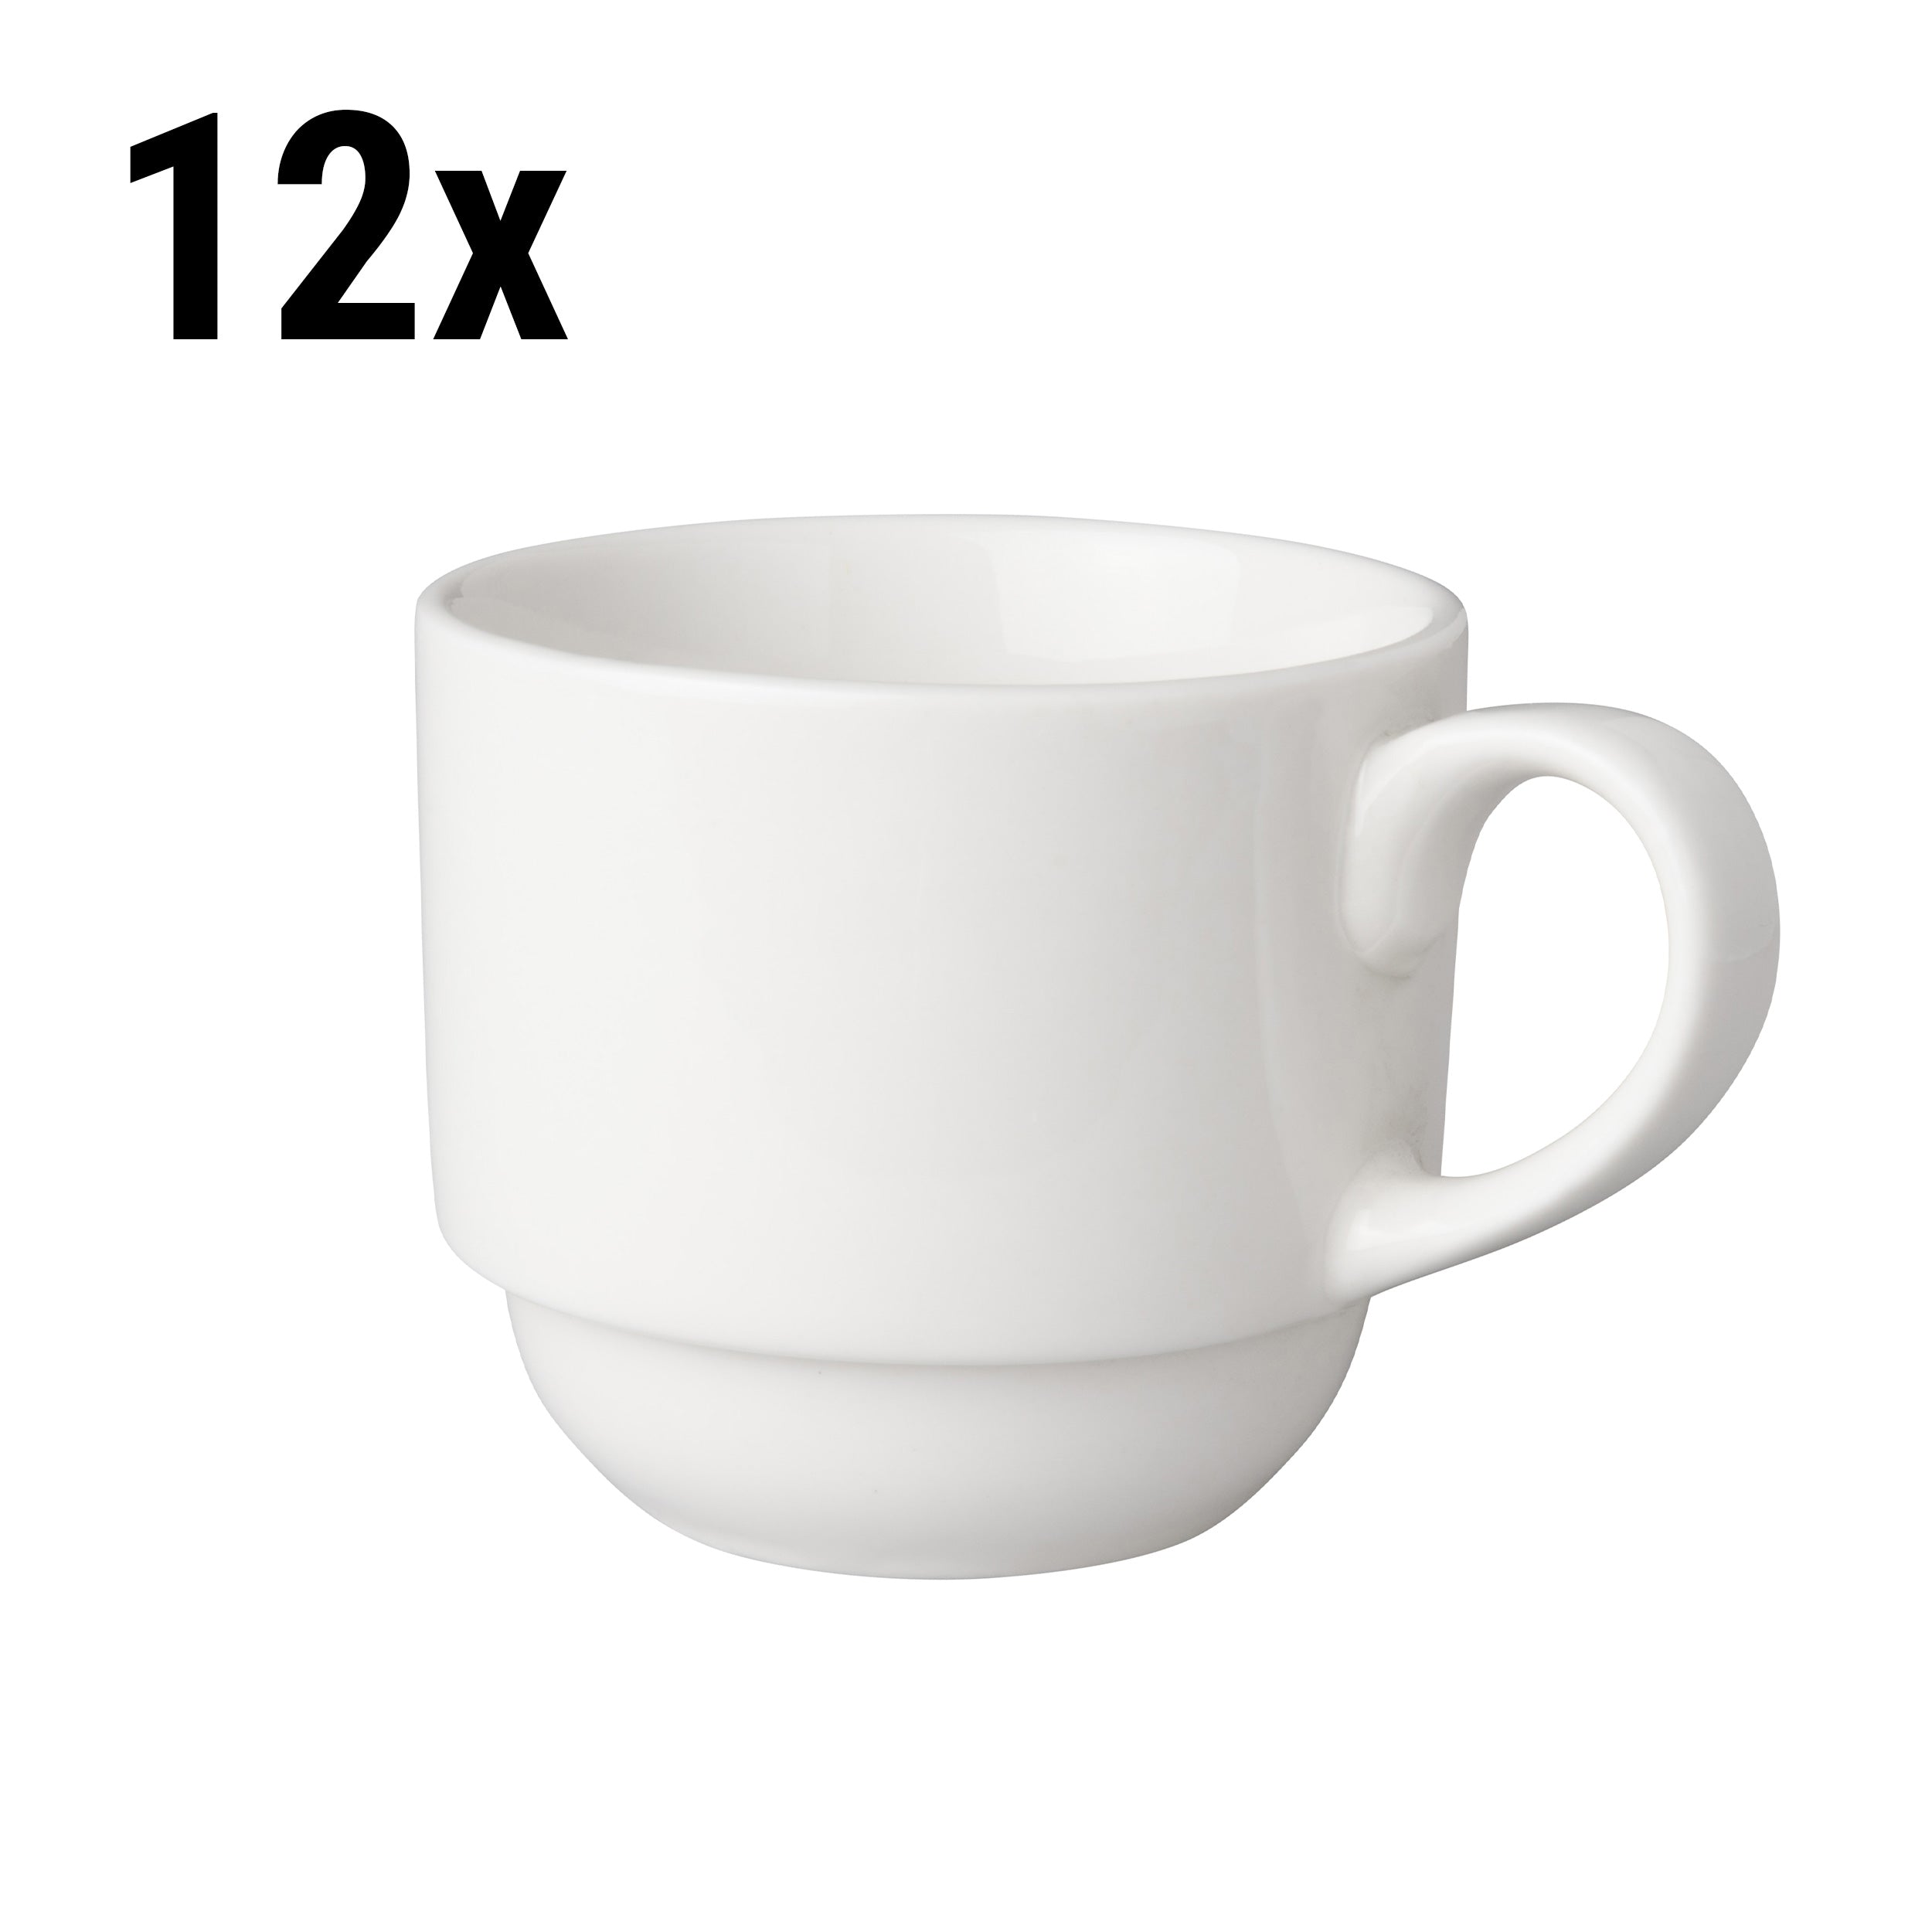 (12 stk.) Mammoet kaffekop - 20 cl - Hvid